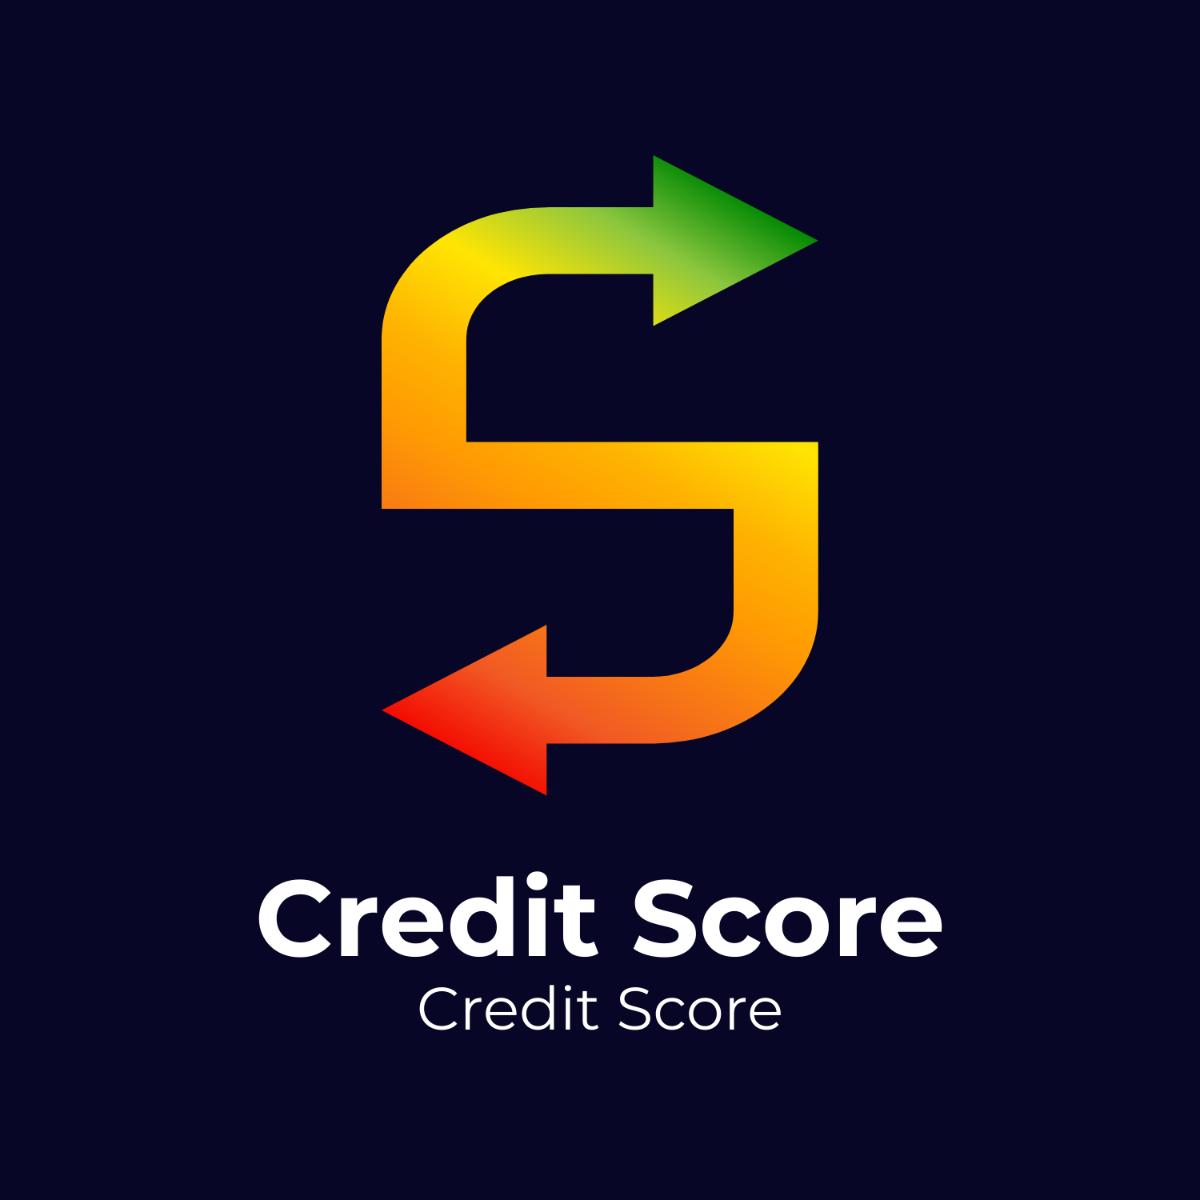 Credit Score Up Arrow Logo Template